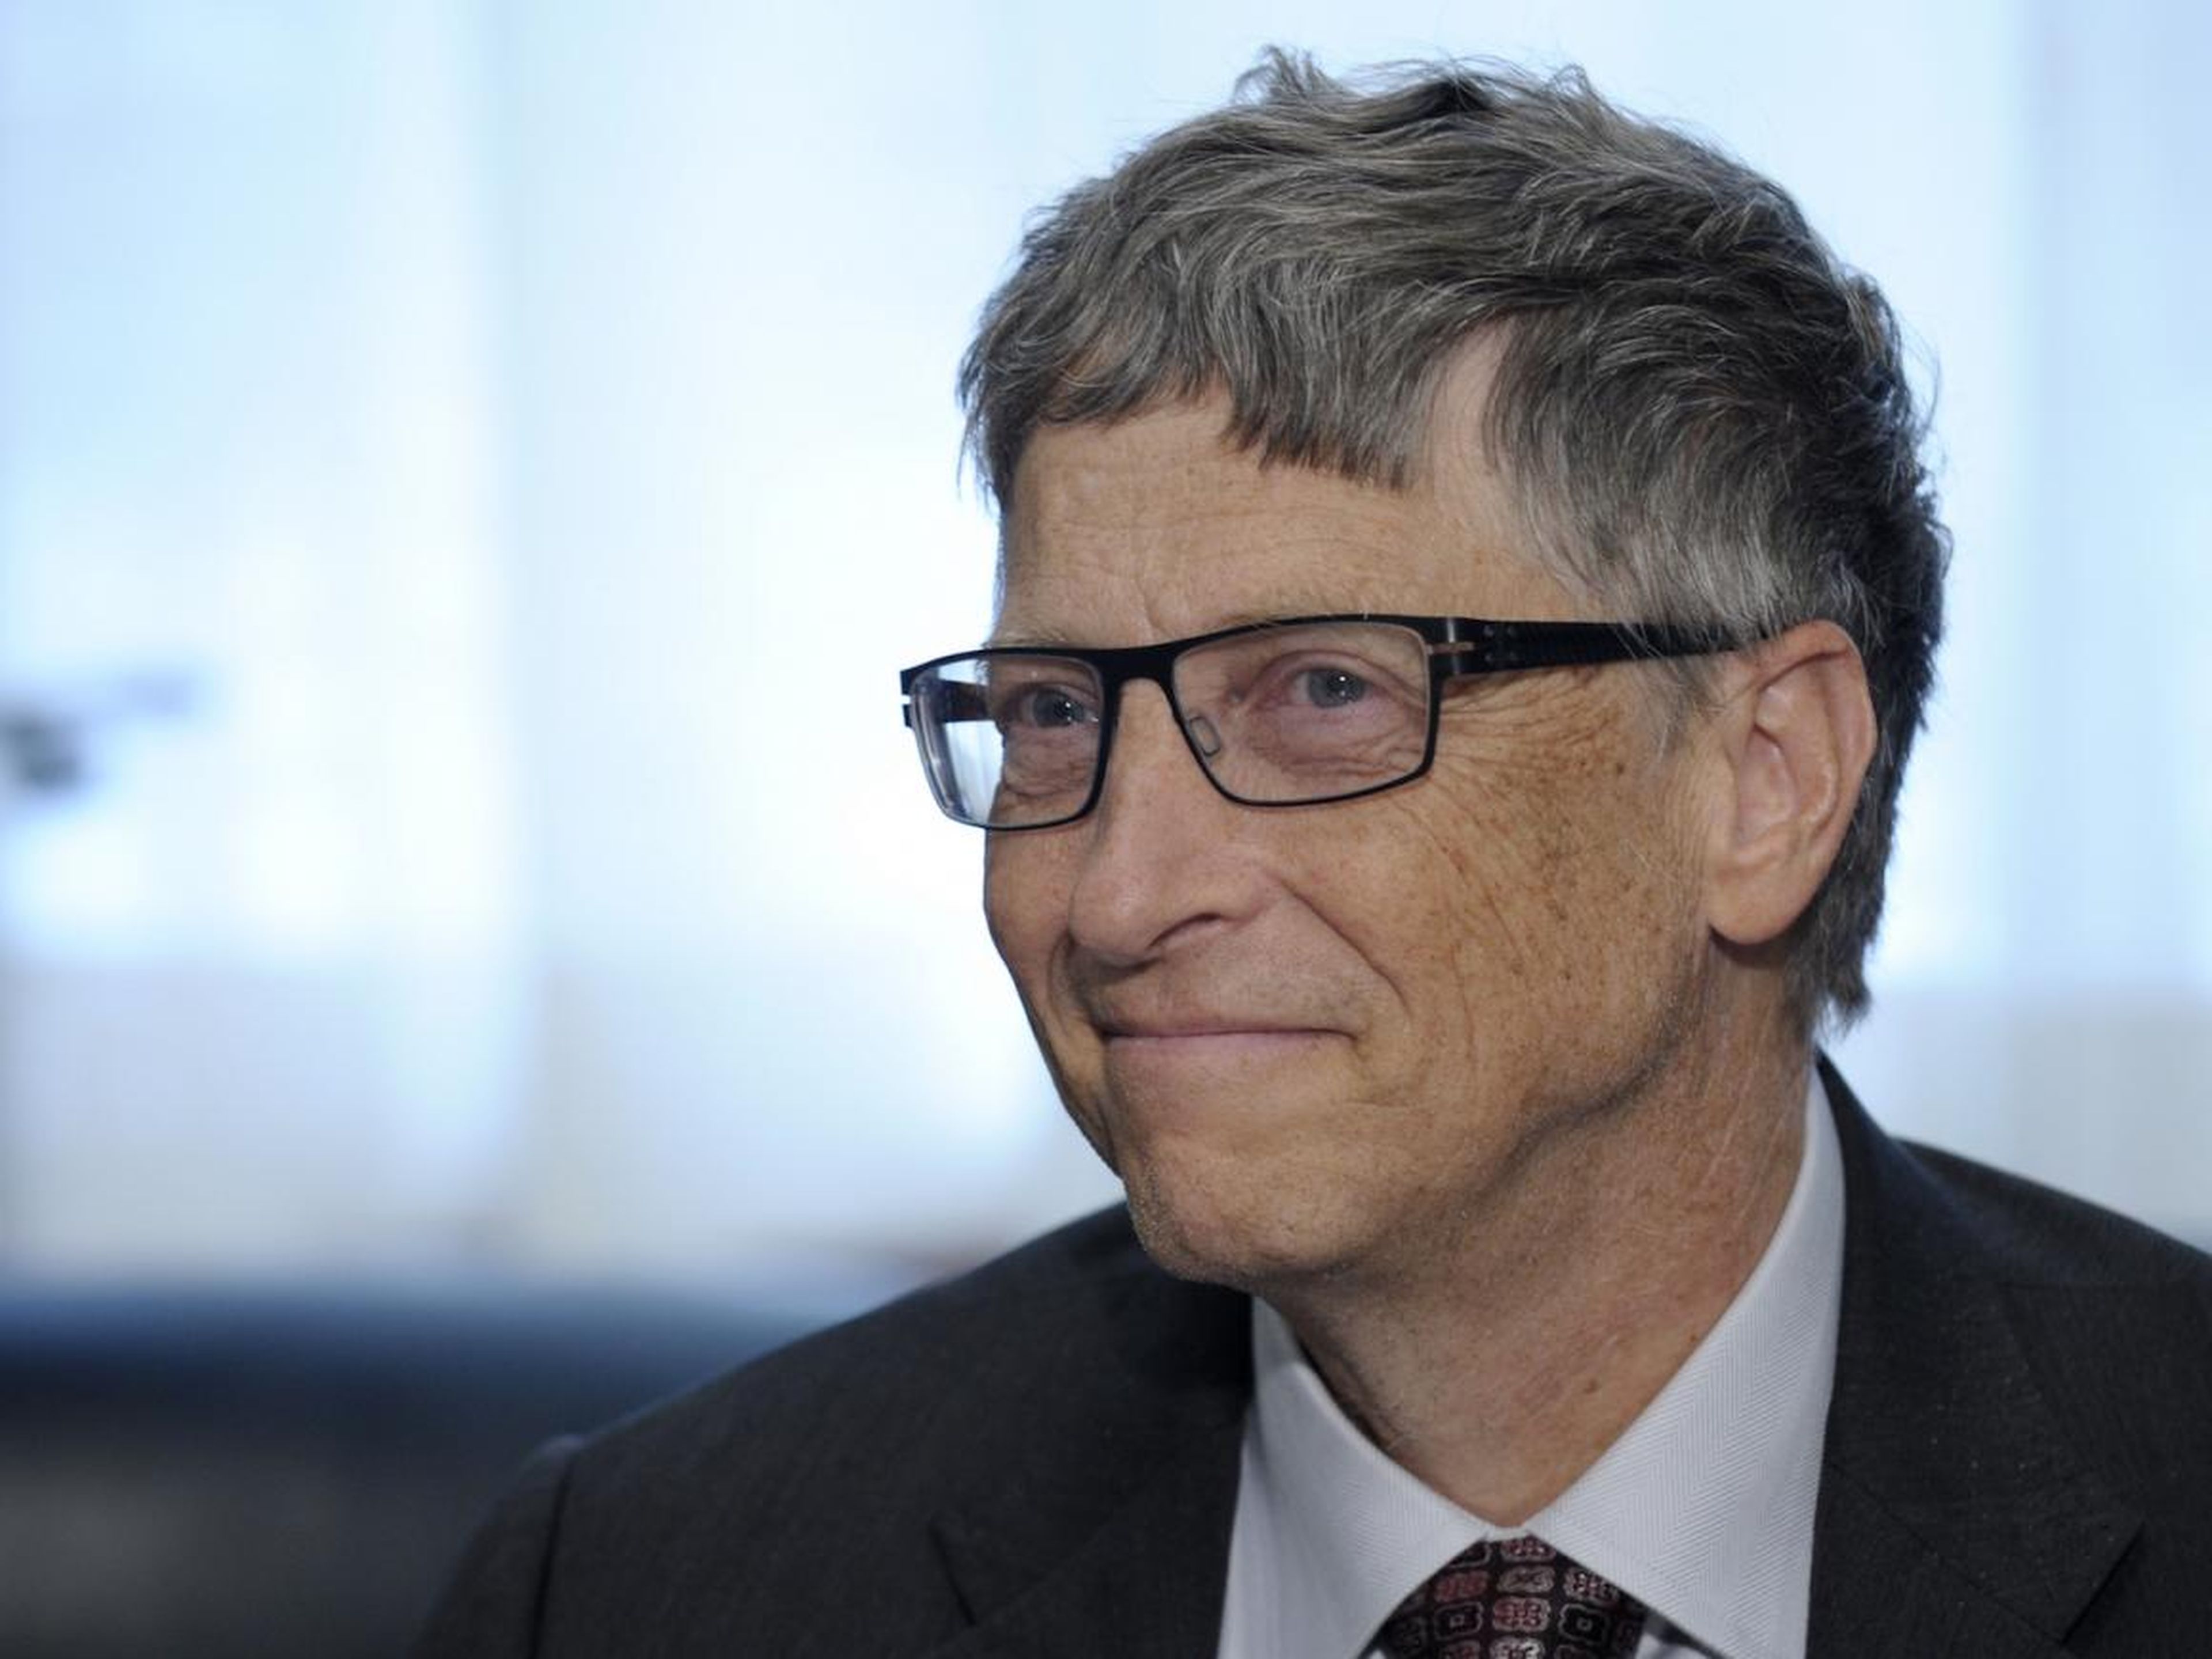 Microsoft cofounder Bill Gates has said his private jet is his "guilty pleasure" and his "big splurge."